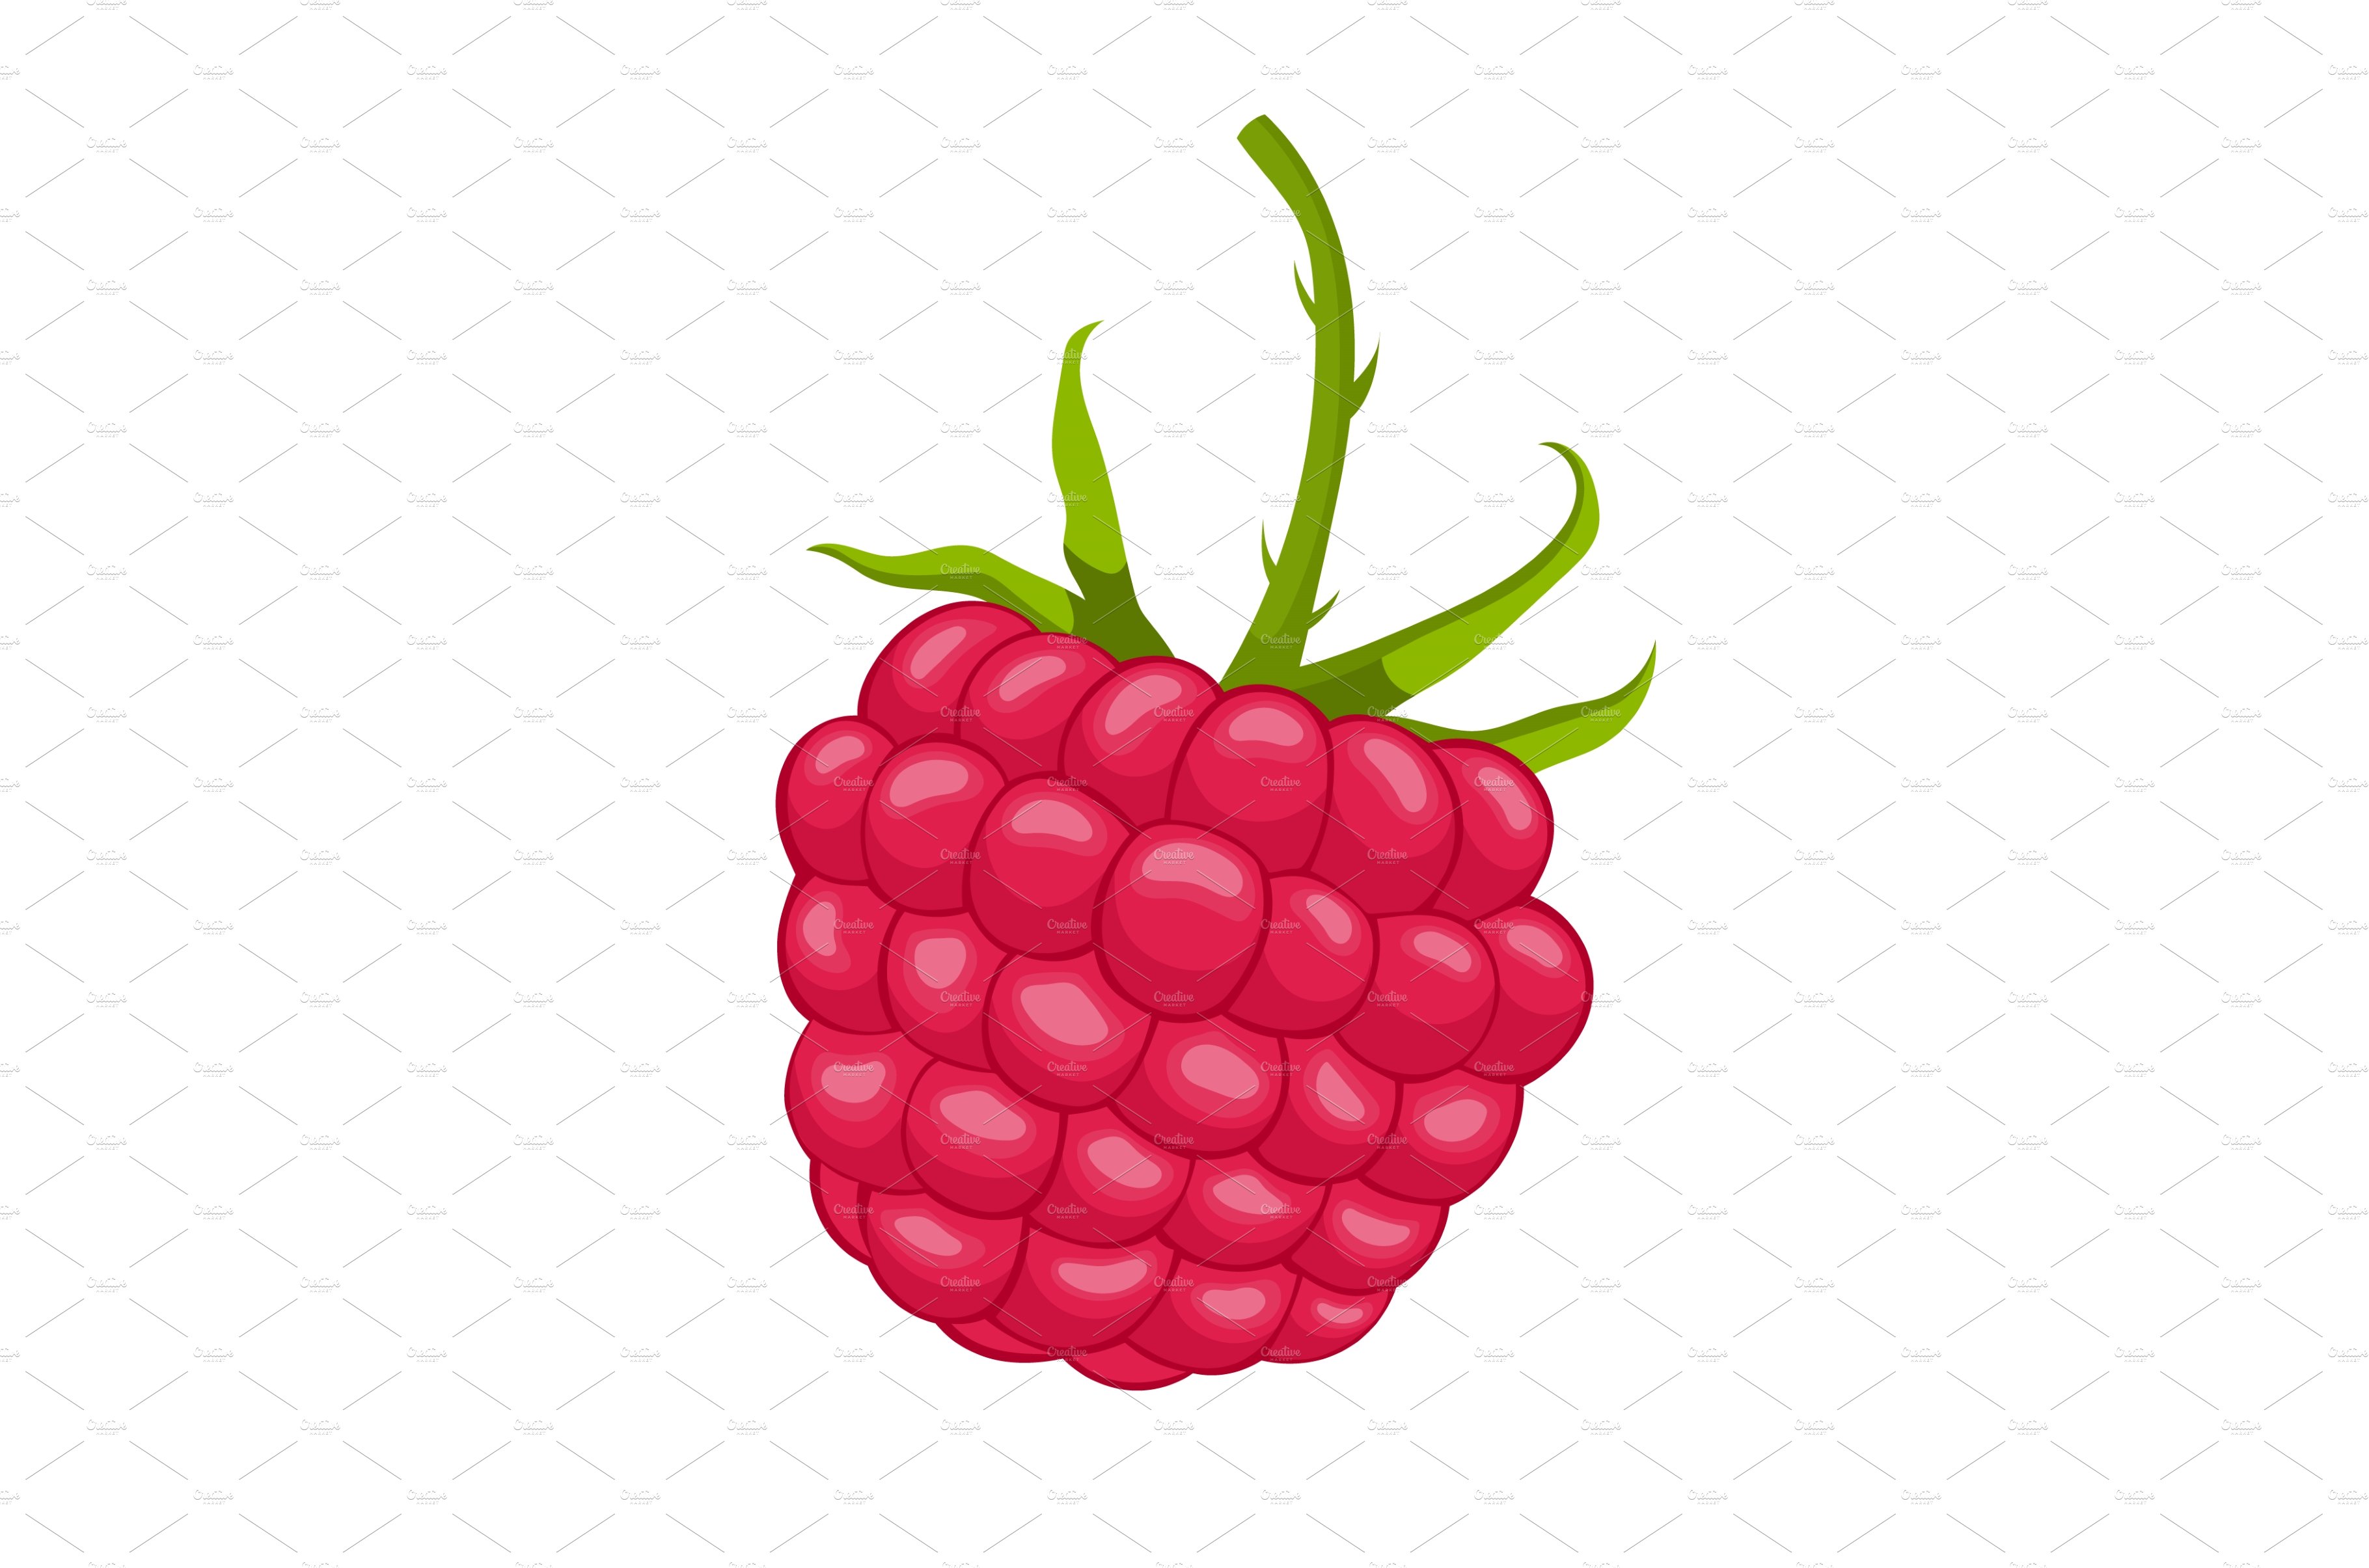 raspberry berry cartoon vector cover image.